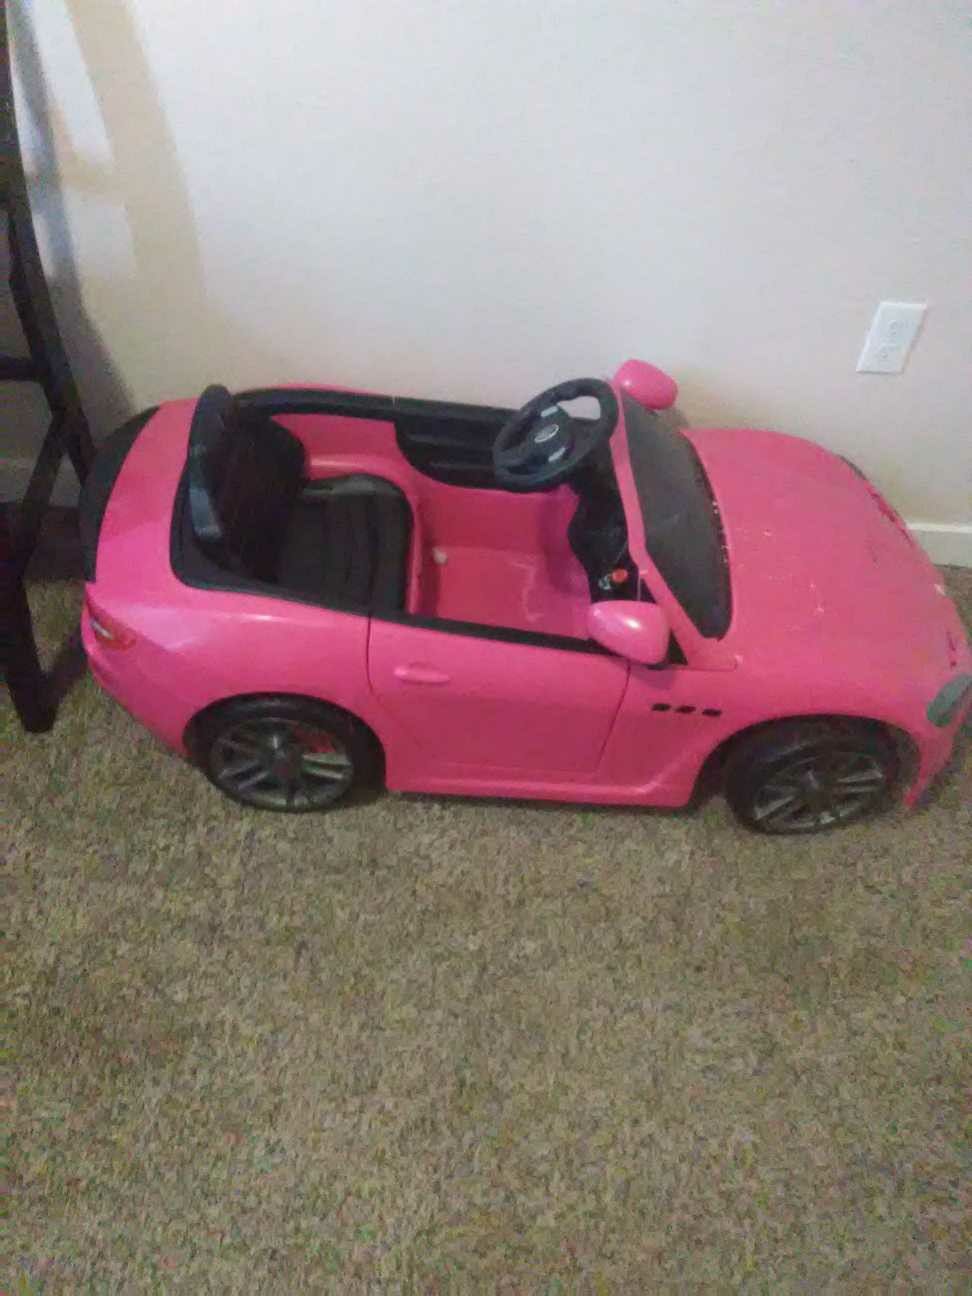 Little girl's toy car